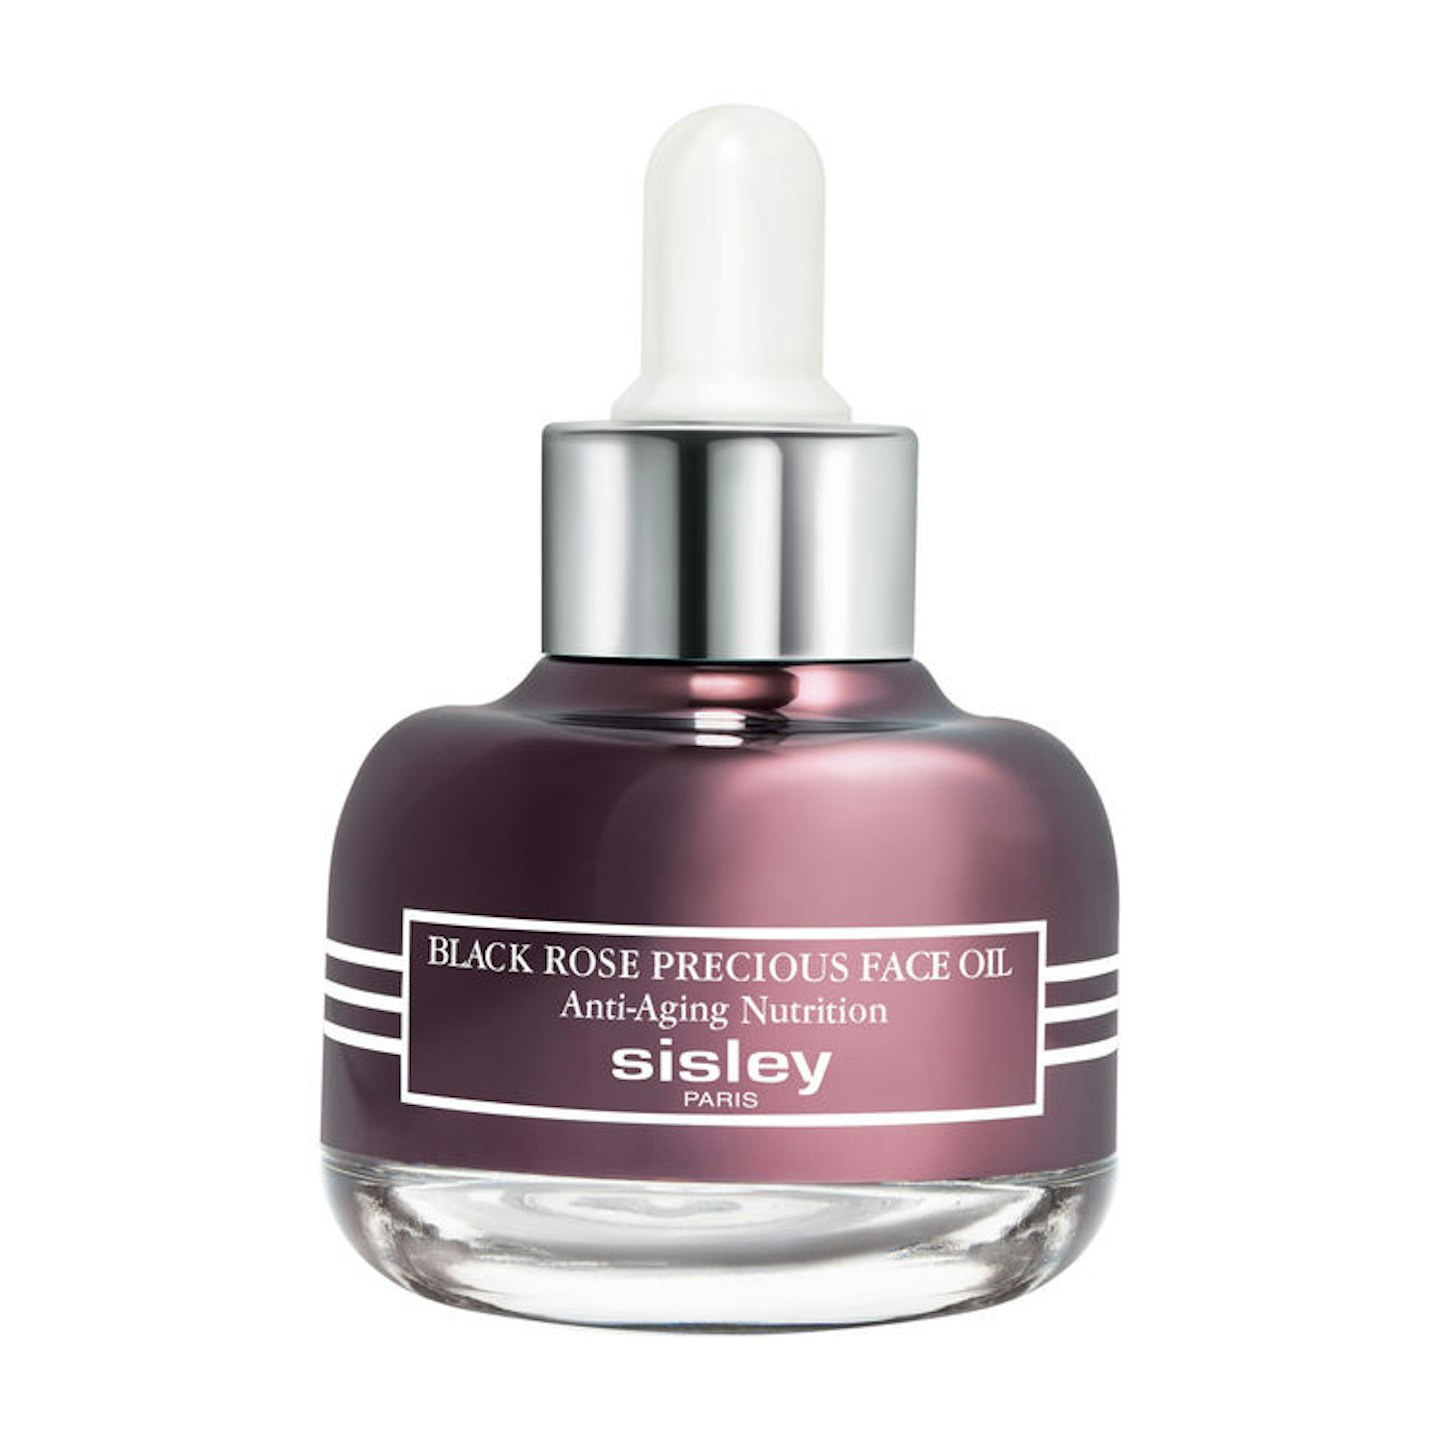 Sisley Black Rose Precious Face Oil, £150